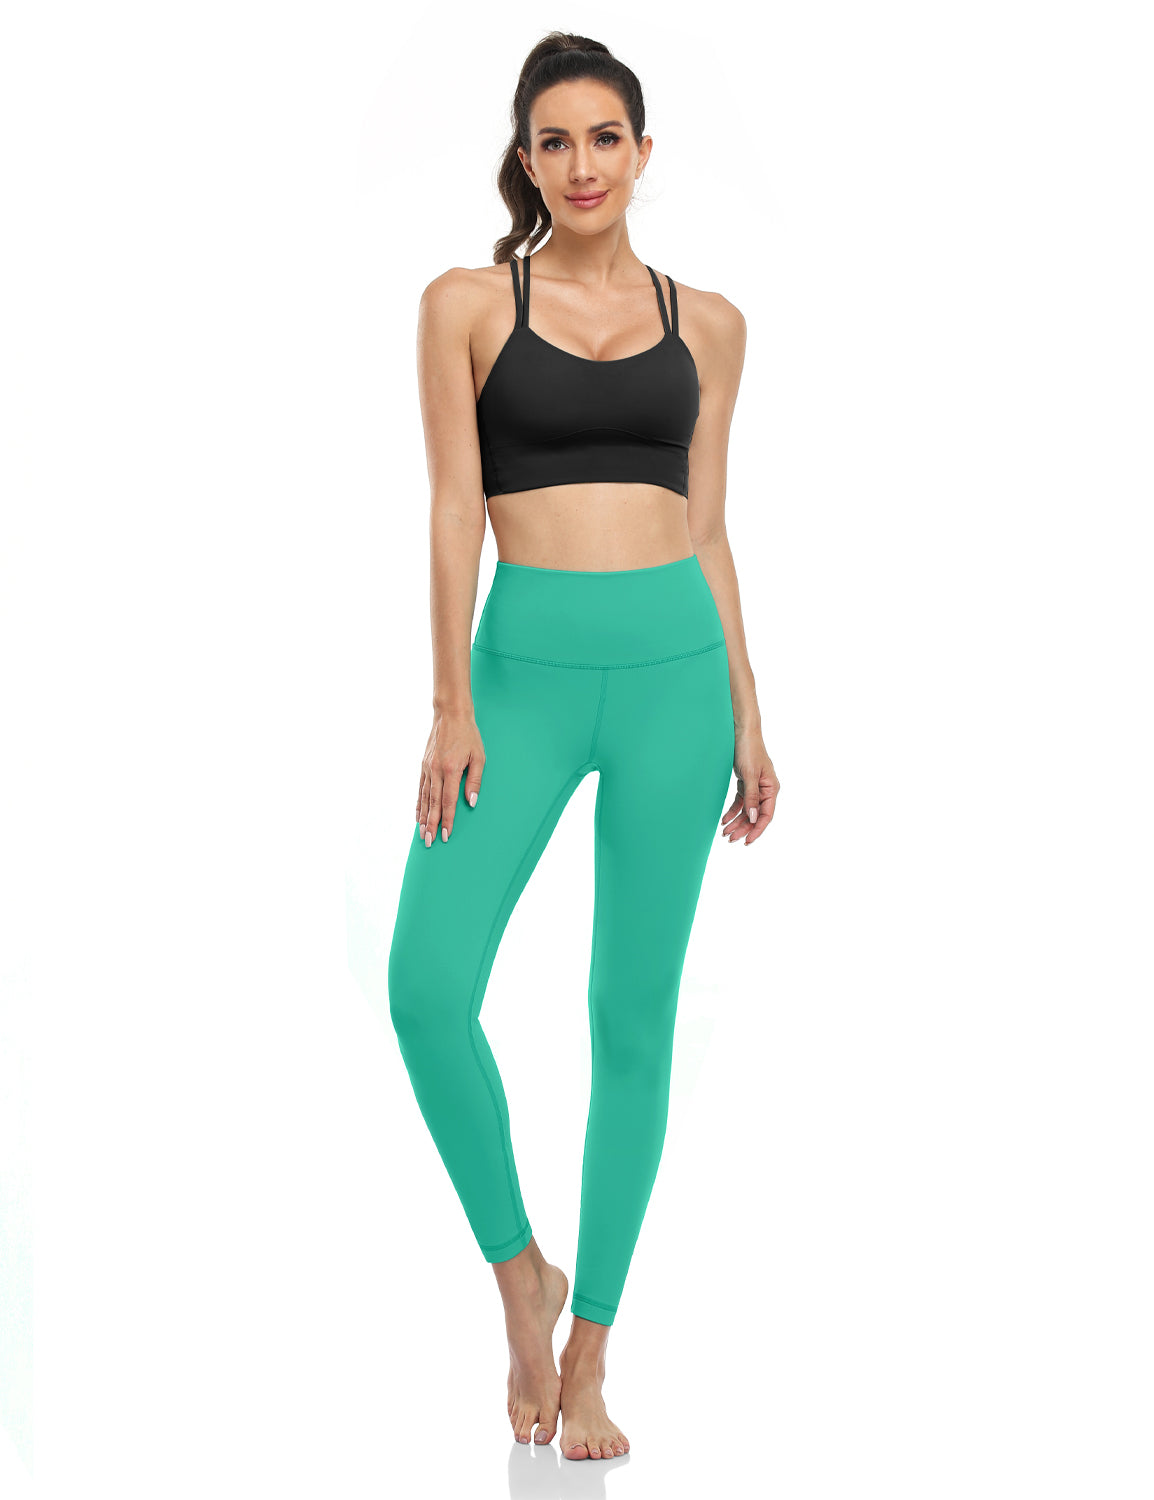 LULULEMON Leggings Pants womens size 4 green space dye workout athletic  JJ#841